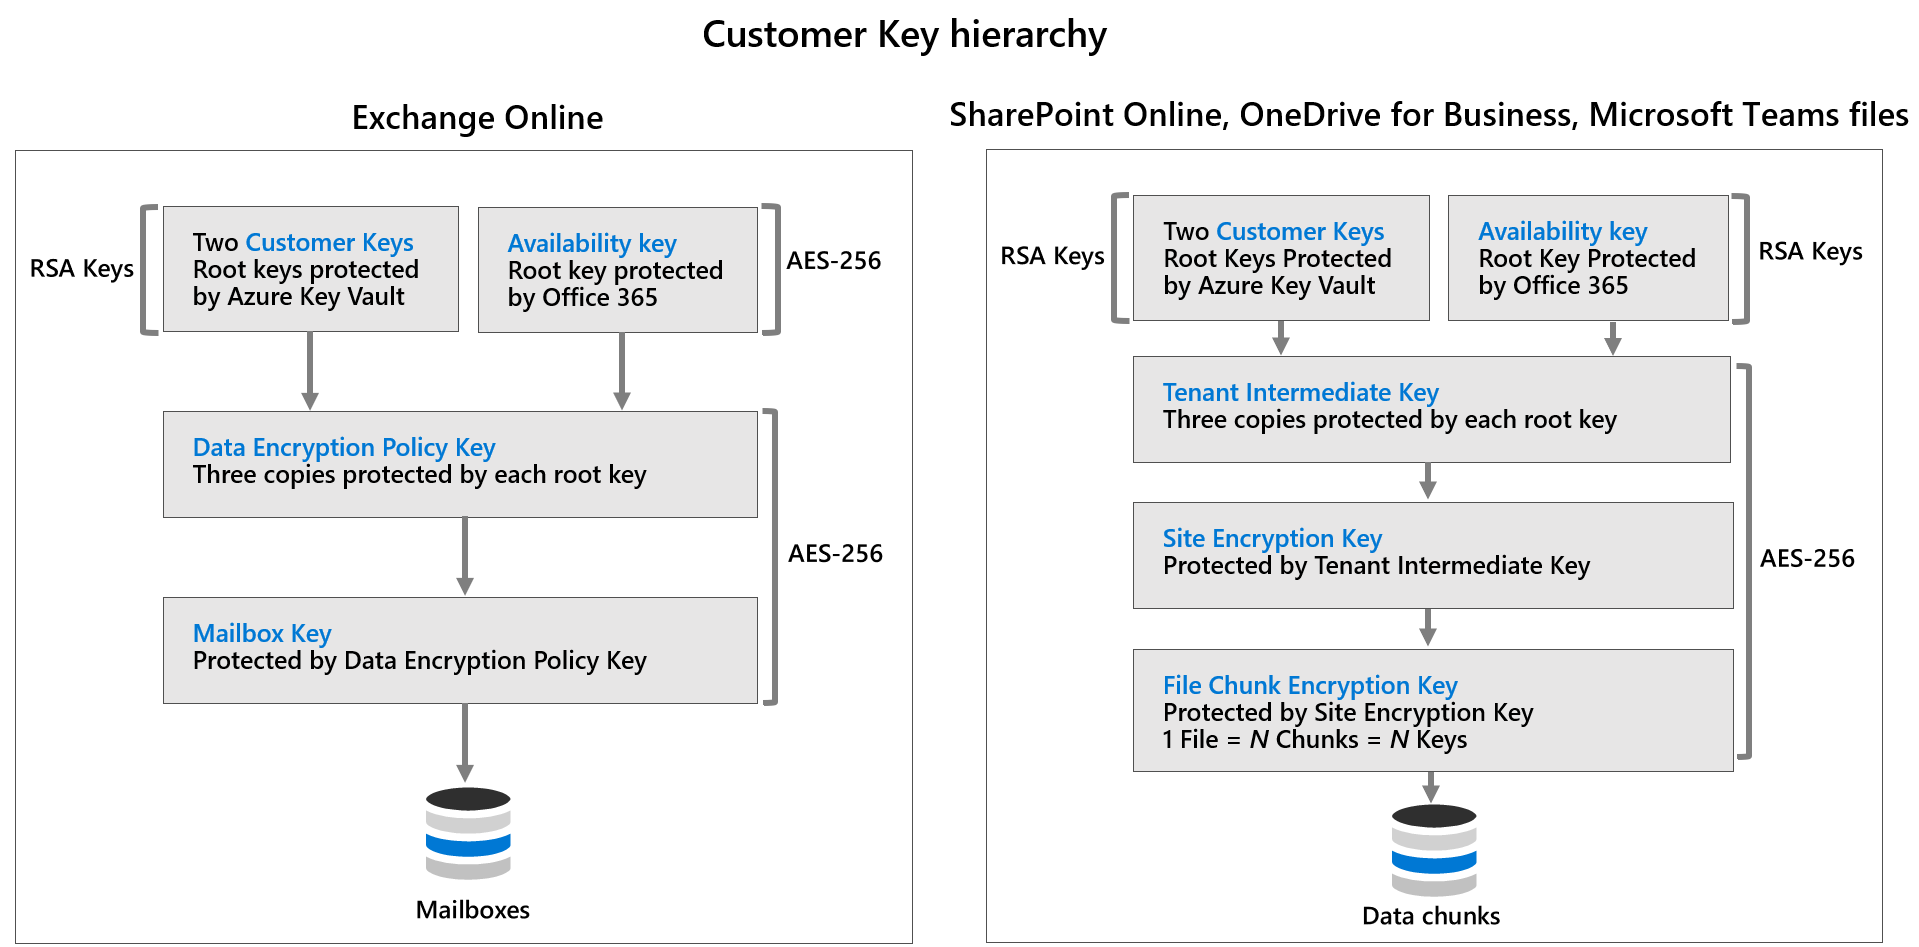 Diagram depicting the Microsoft Customer Key hierarchy.